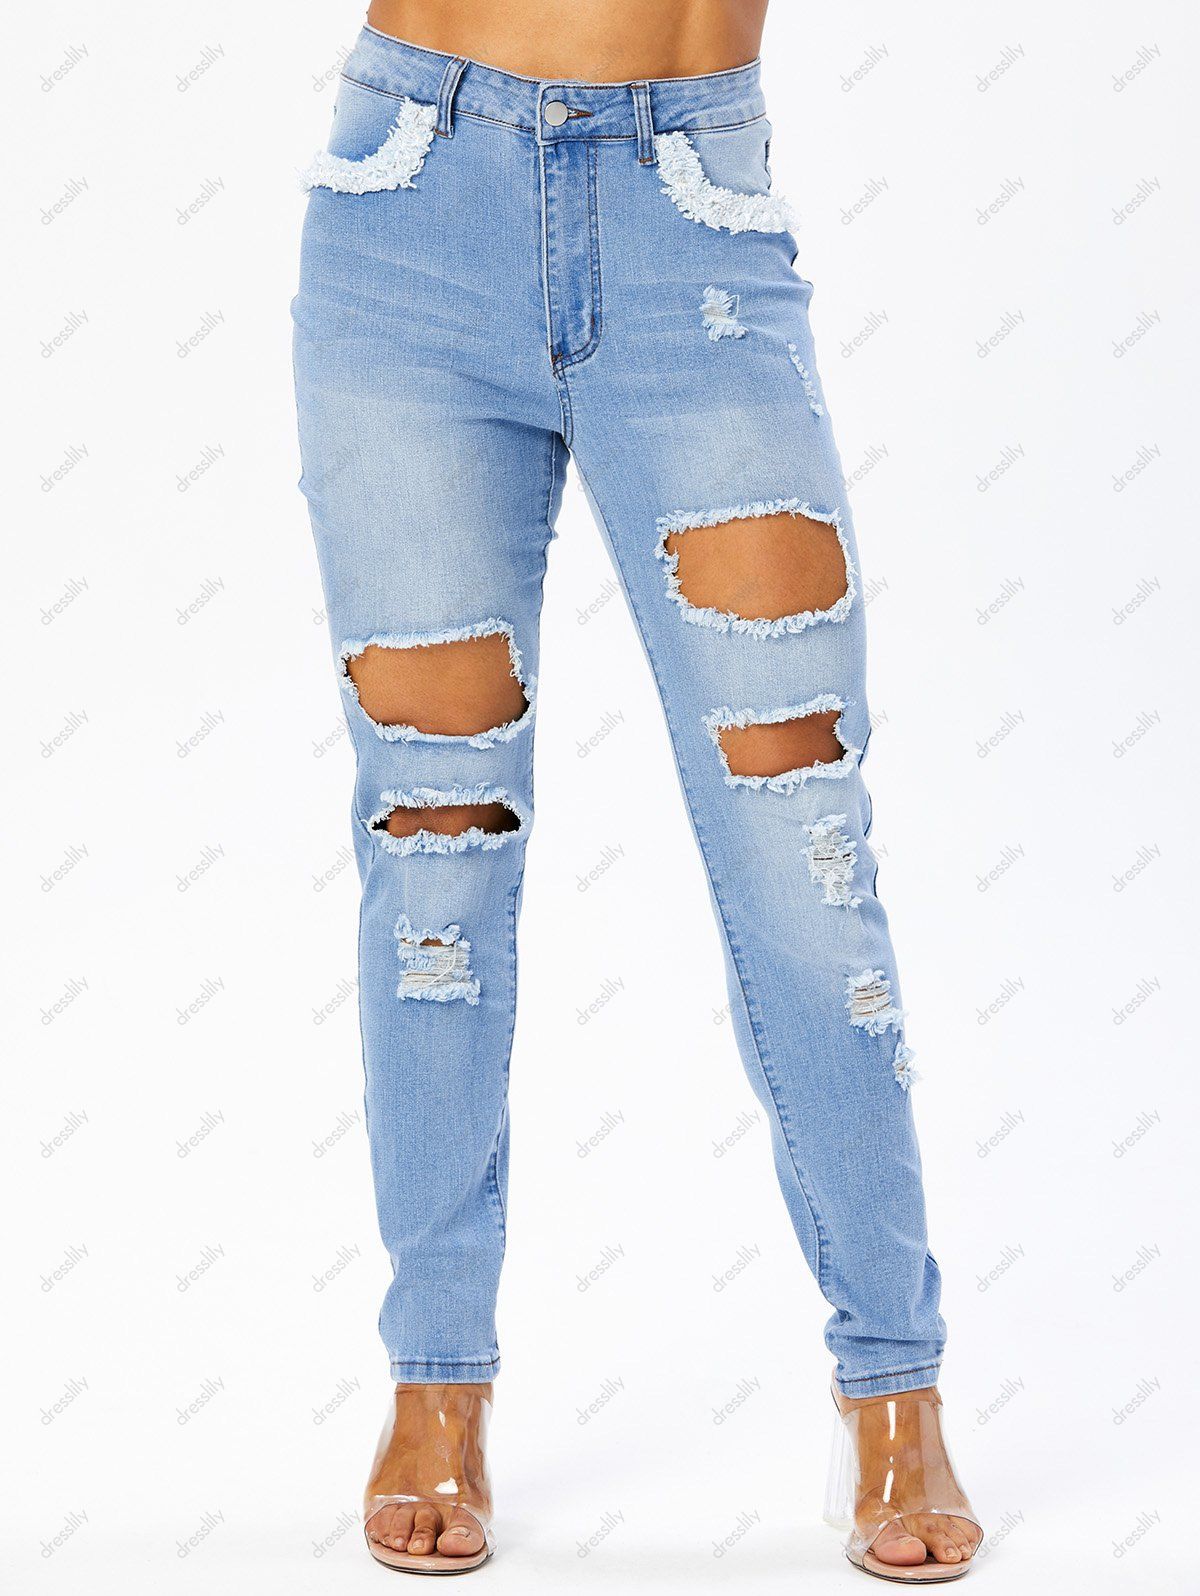 Skinny Jeans Ripped Mock Pockets Zipper Fly Light Wash Trendy Long Denim Pants 